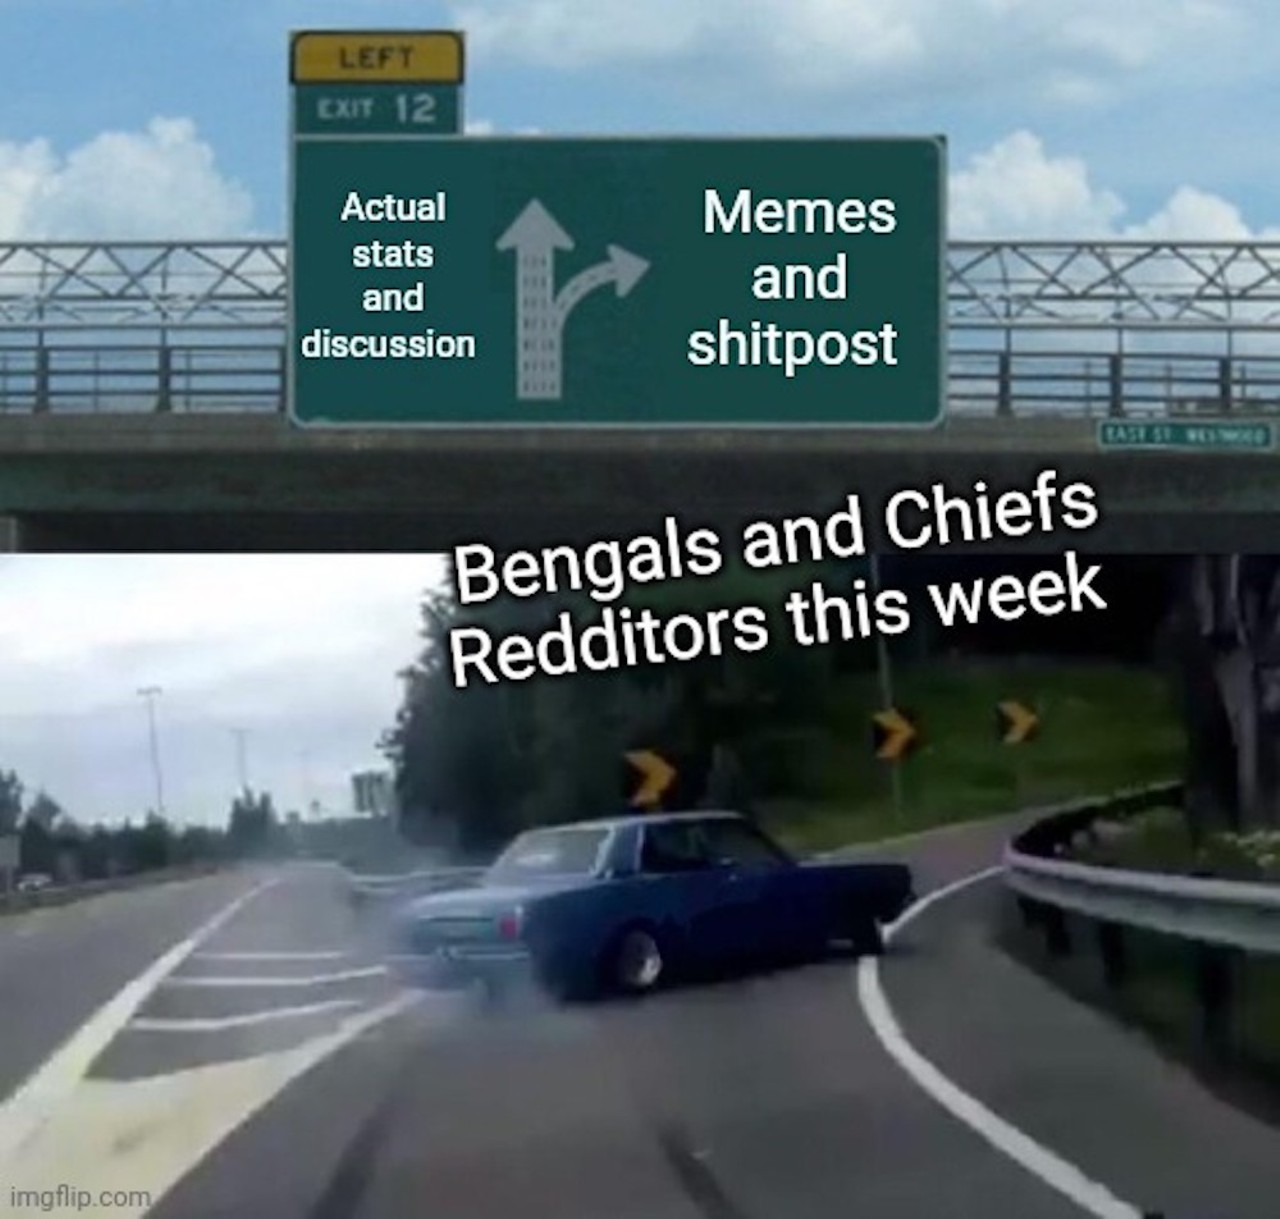 Bengals and Chiefs Fans Clash in Reddit Meme War Ahead of Matchup, Cincinnati